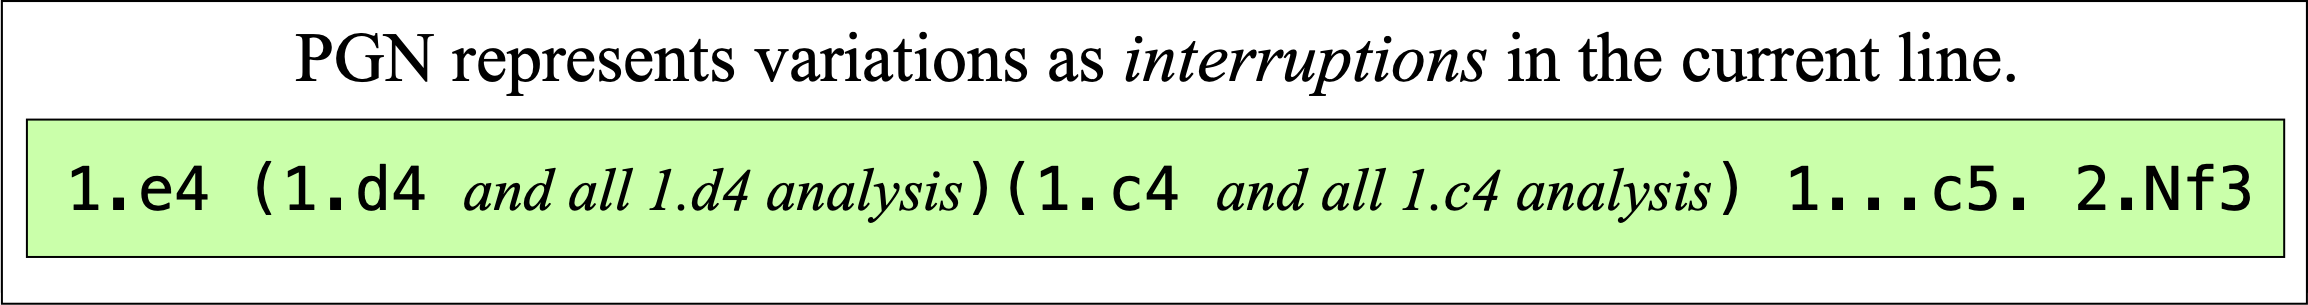 Variations_are_interruptions